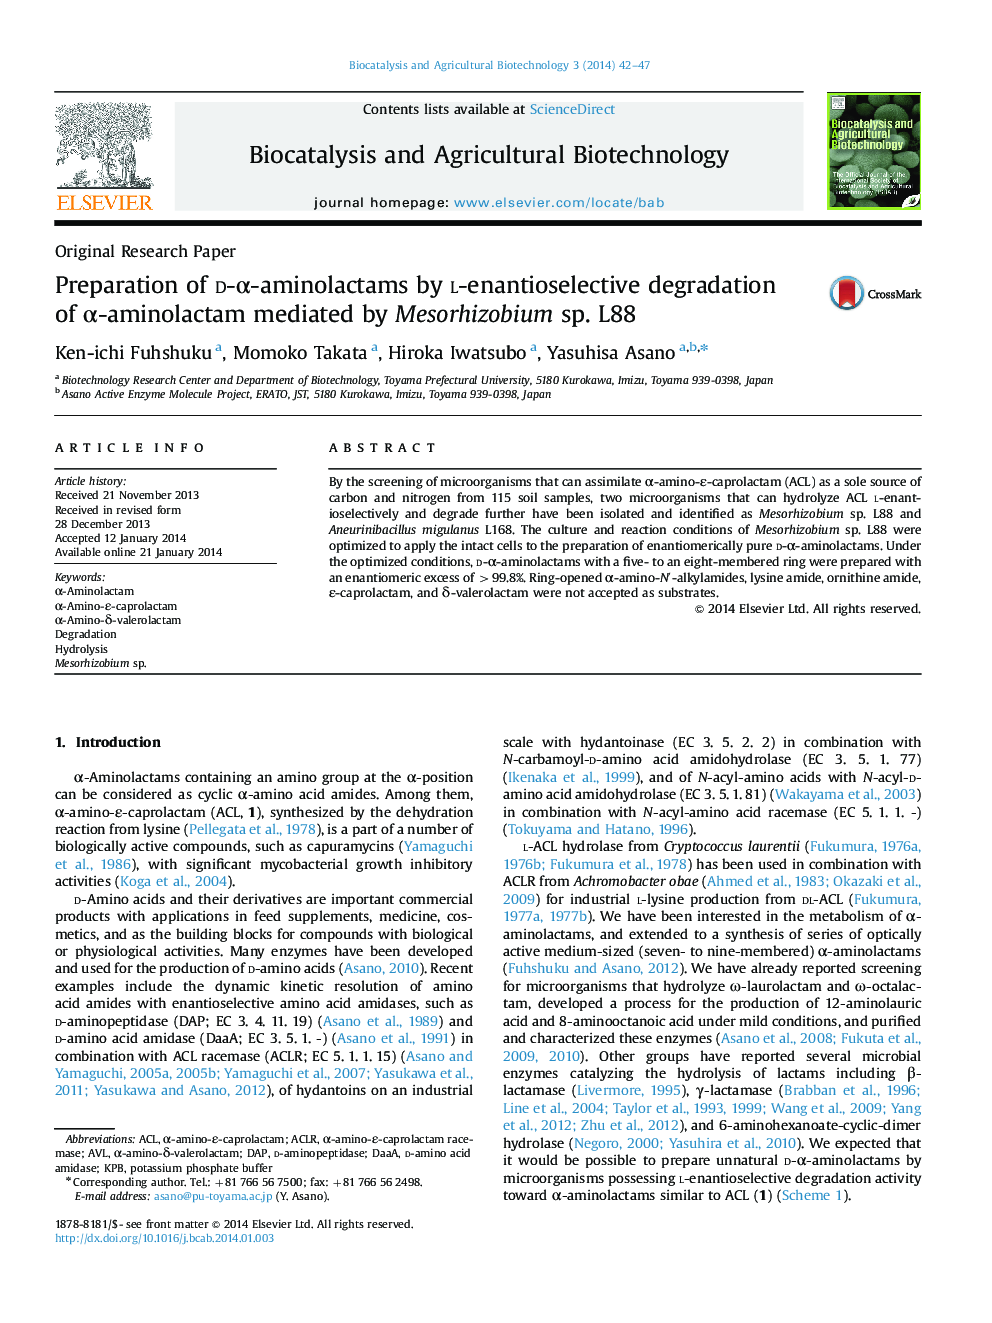 Preparation of d-α-aminolactams by l-enantioselective degradation of α-aminolactam mediated by Mesorhizobium sp. L88